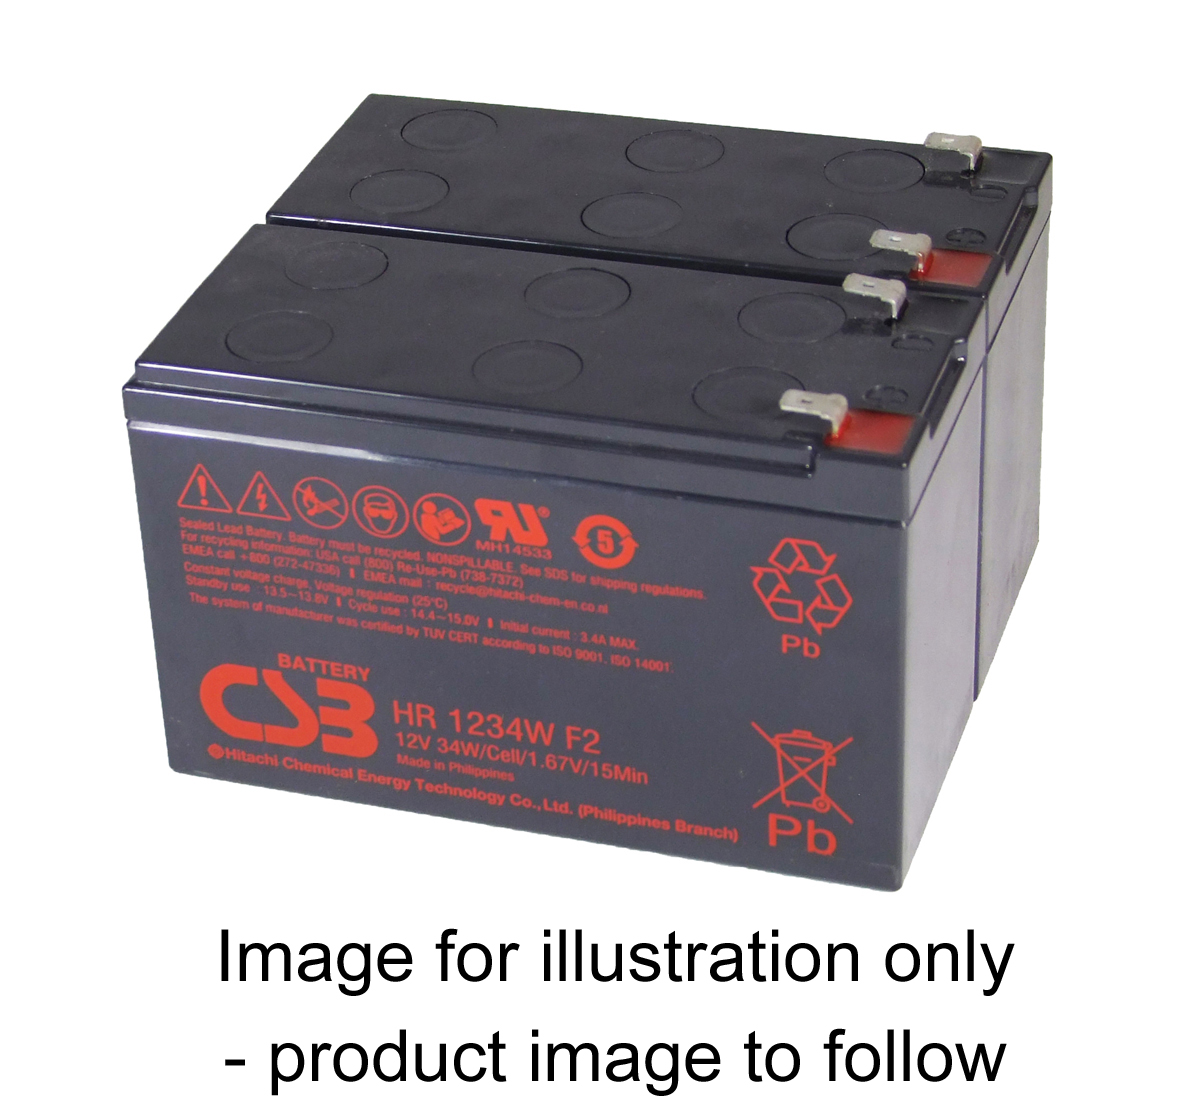 MDSV210 UPS Battery Kit - Replaces APC RBCV210